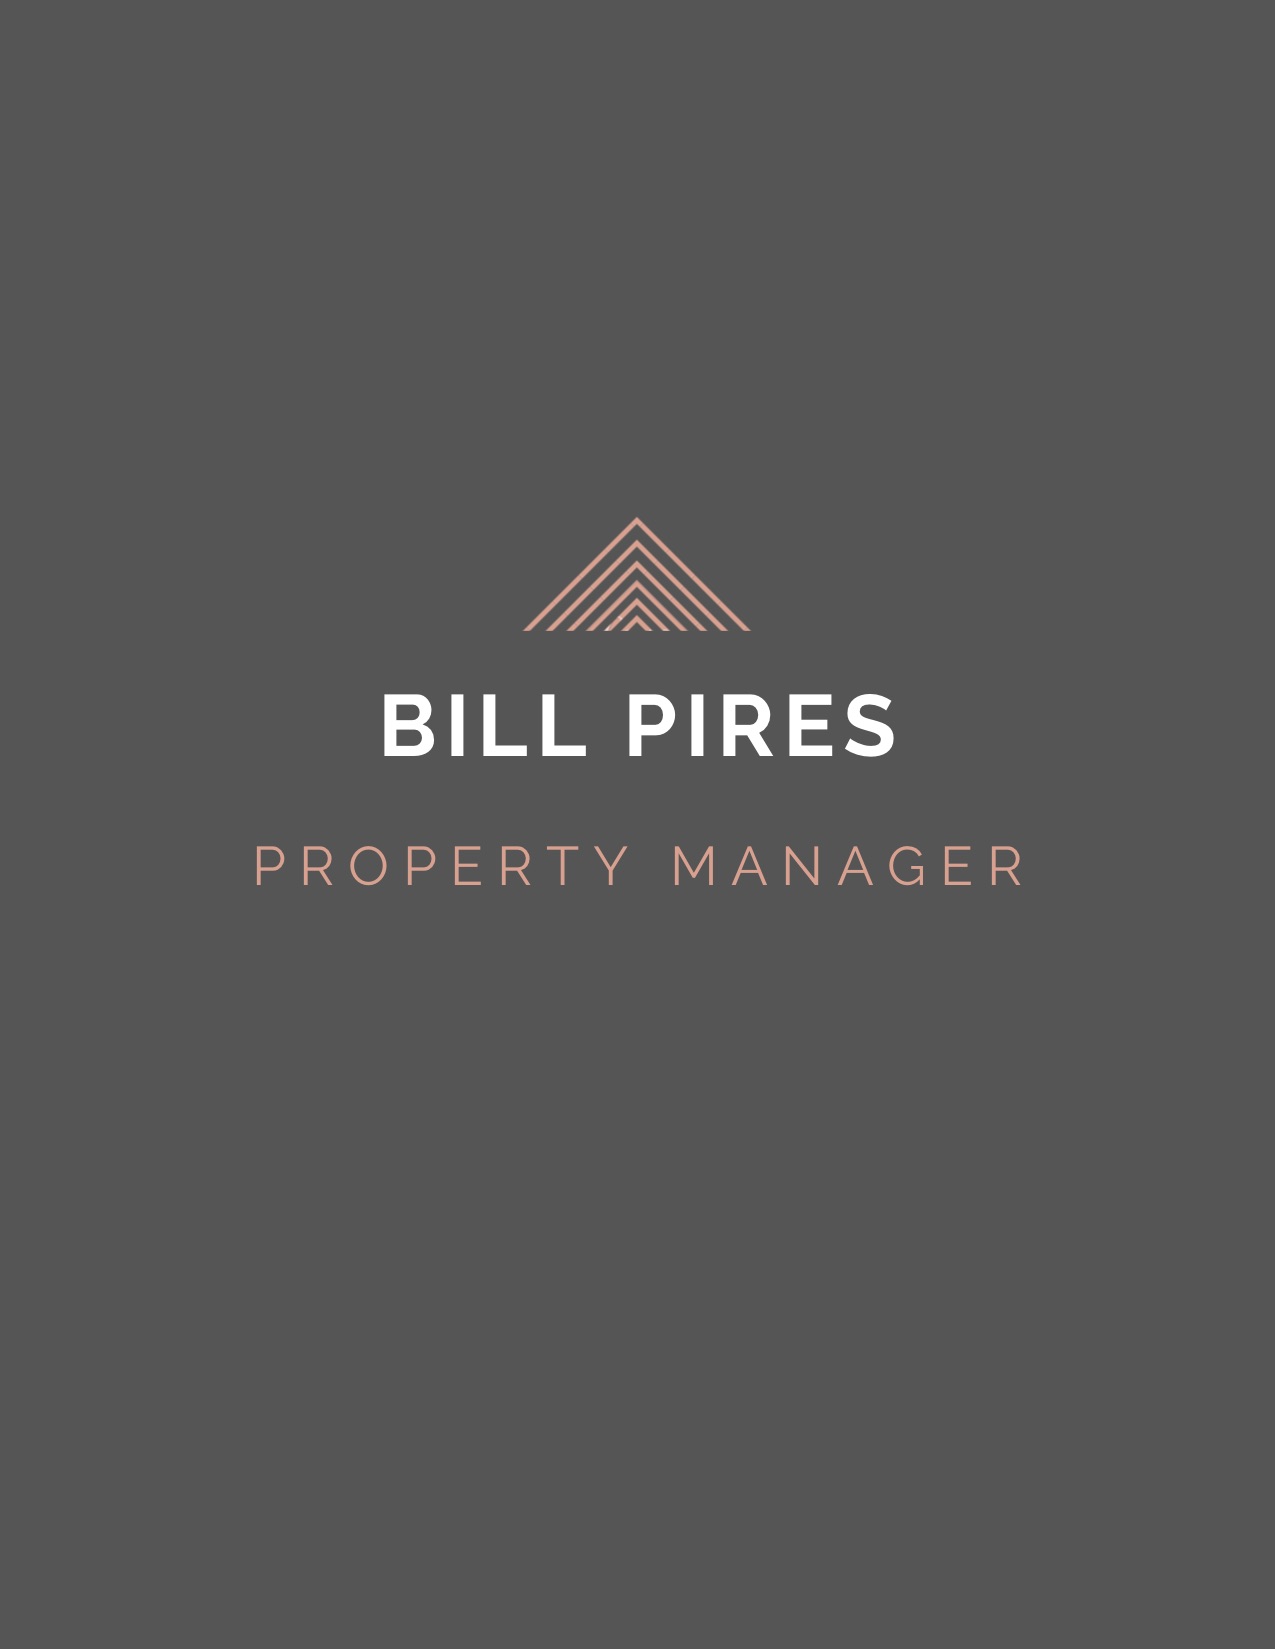 Bill Pires